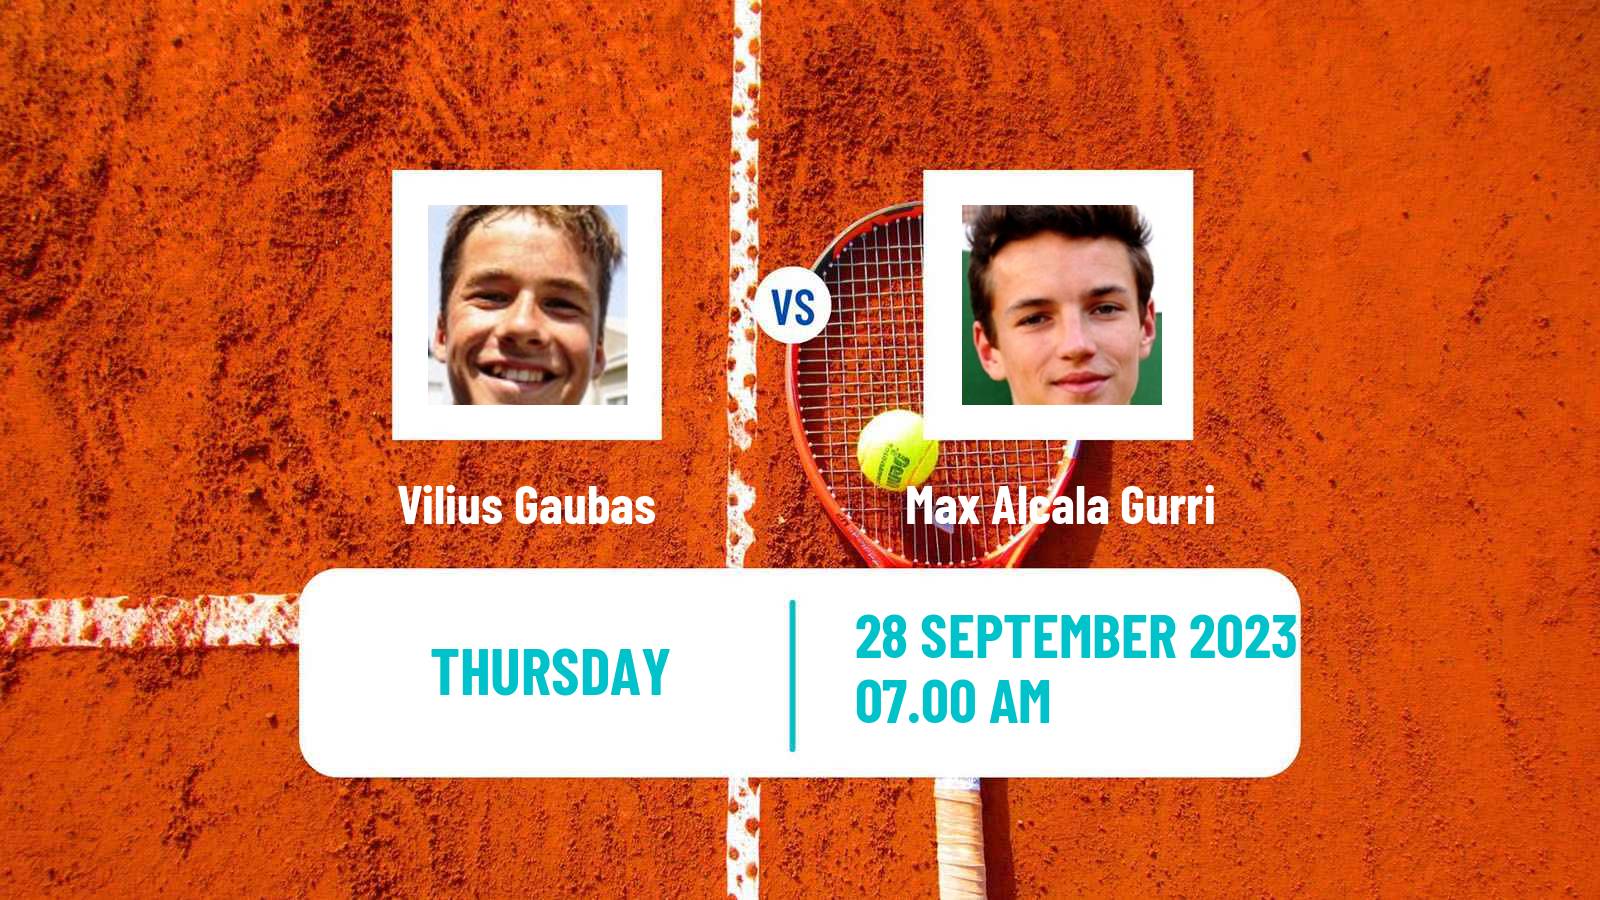 Tennis ITF M25 Sabadell 2 Men Vilius Gaubas - Max Alcala Gurri